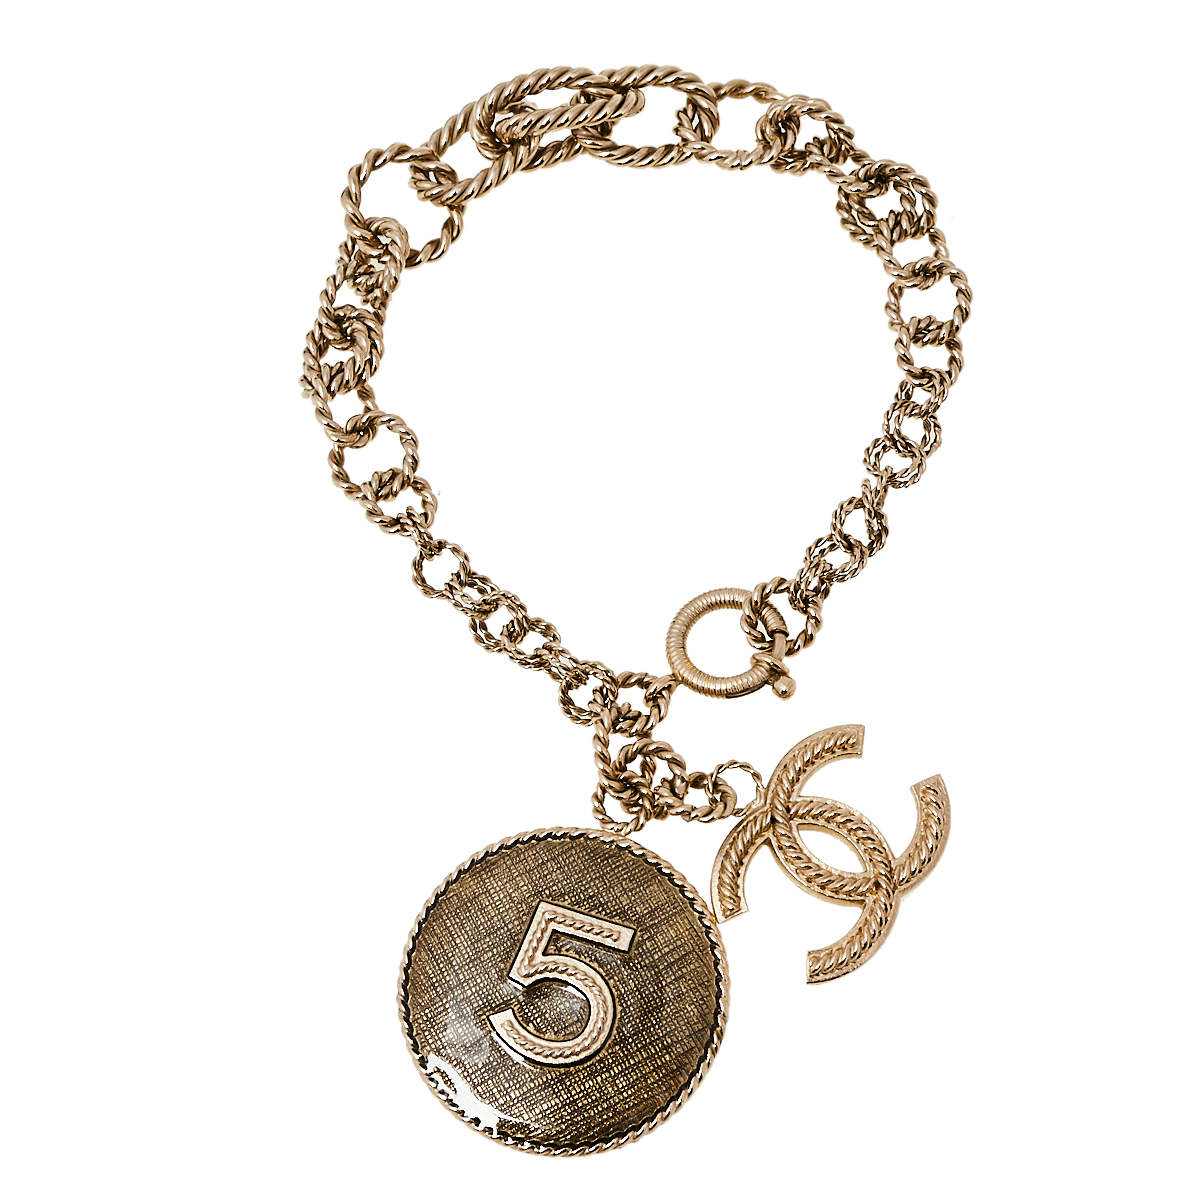 Copper Alloy Wrist Jewelry Bracelets